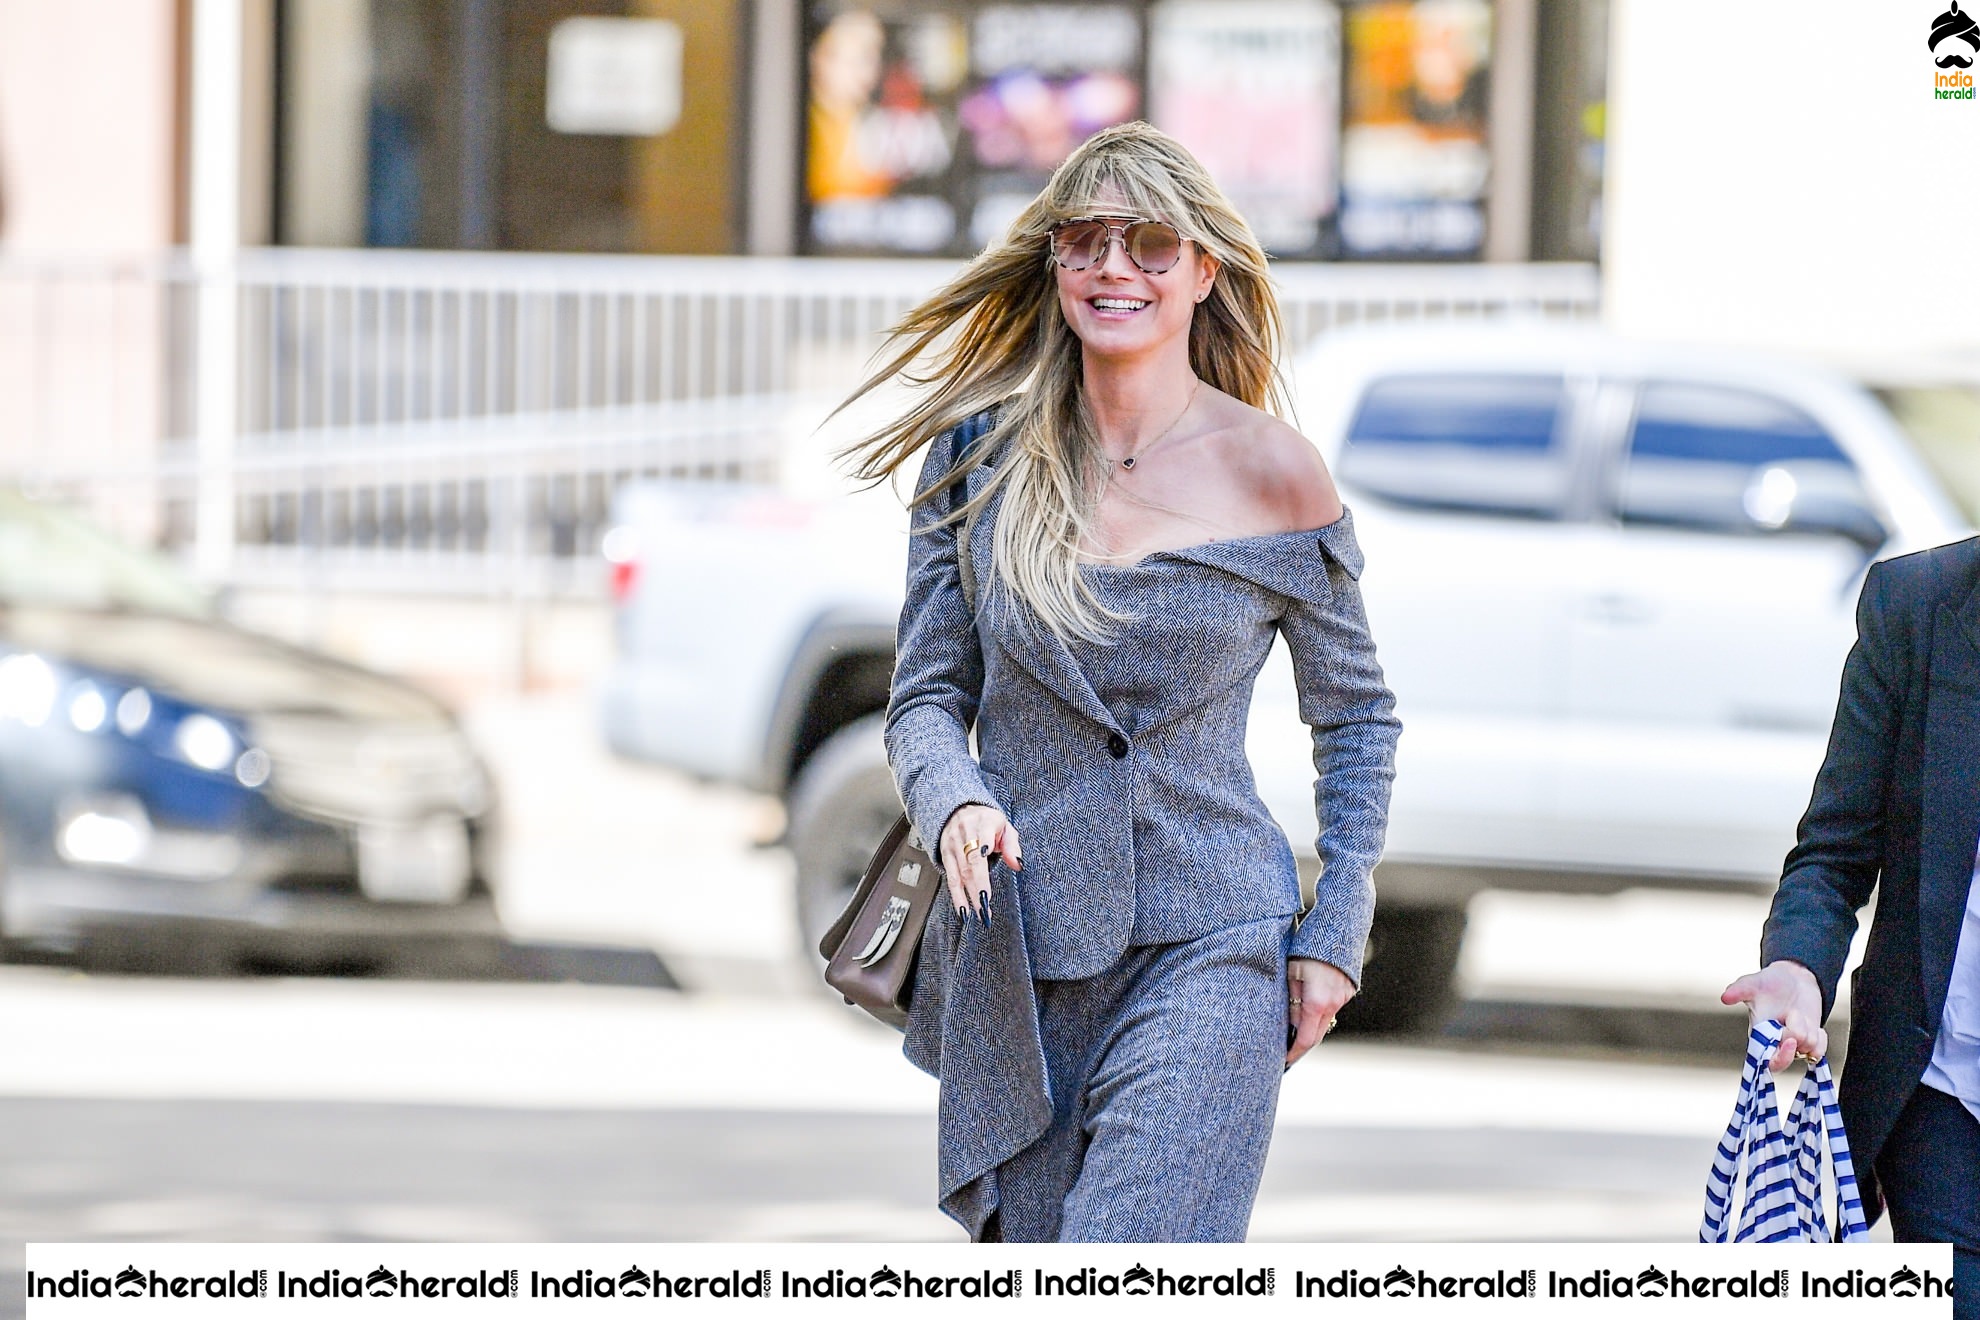 Heidi Klum arriving to film America Got Talent in Pasadena